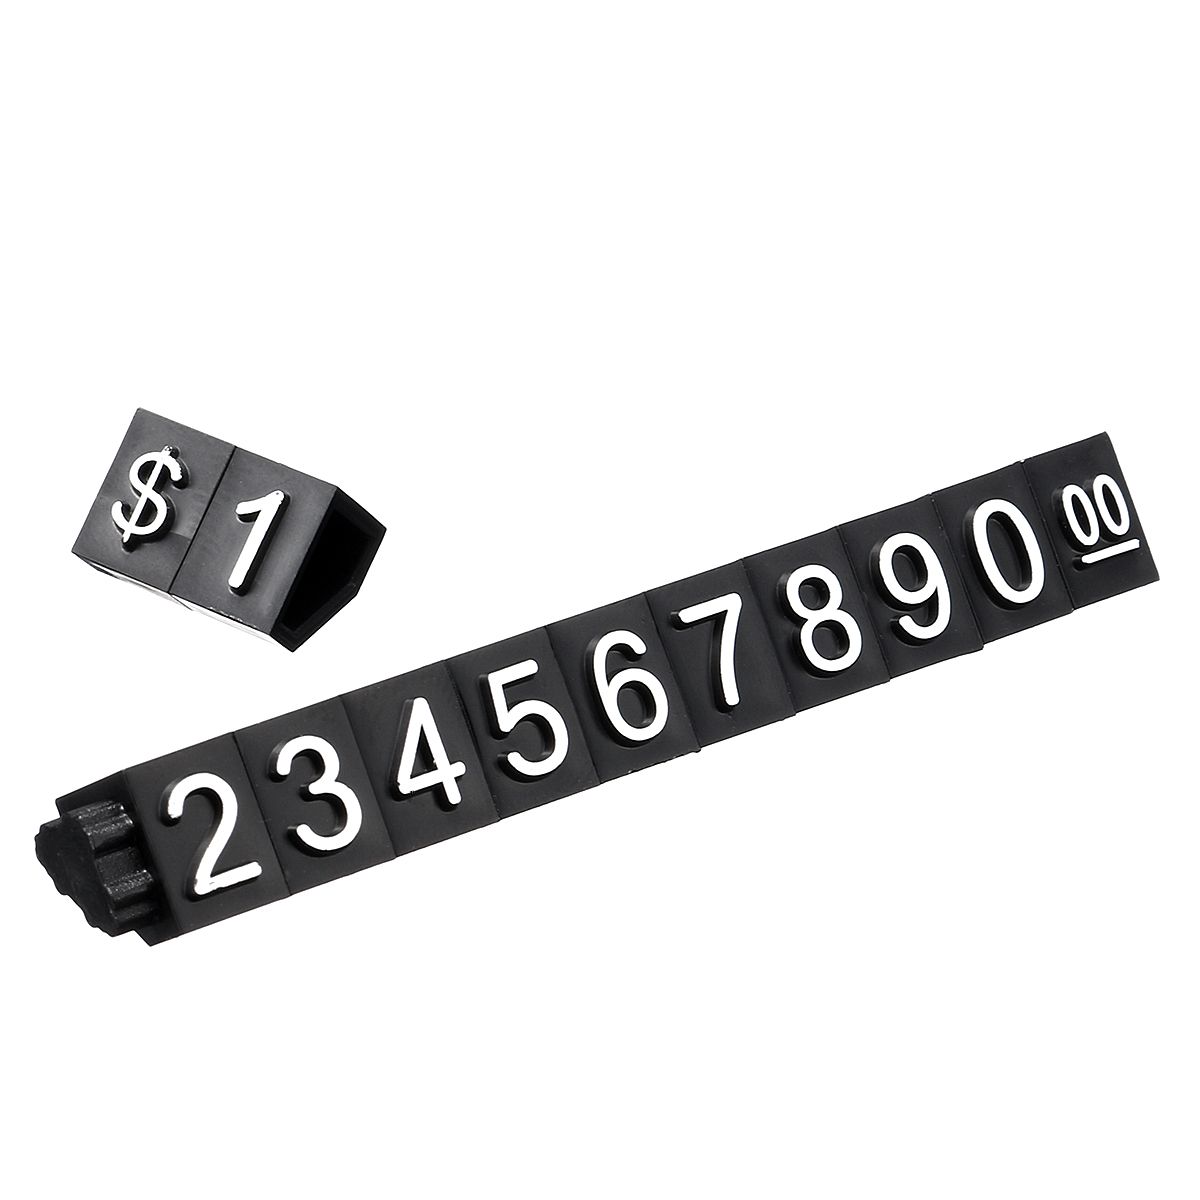 360-Cubes-White-on-Black-Adjustable-Sale-Price-Display-Blank-Tag-Label-Retail-Shop-1321242